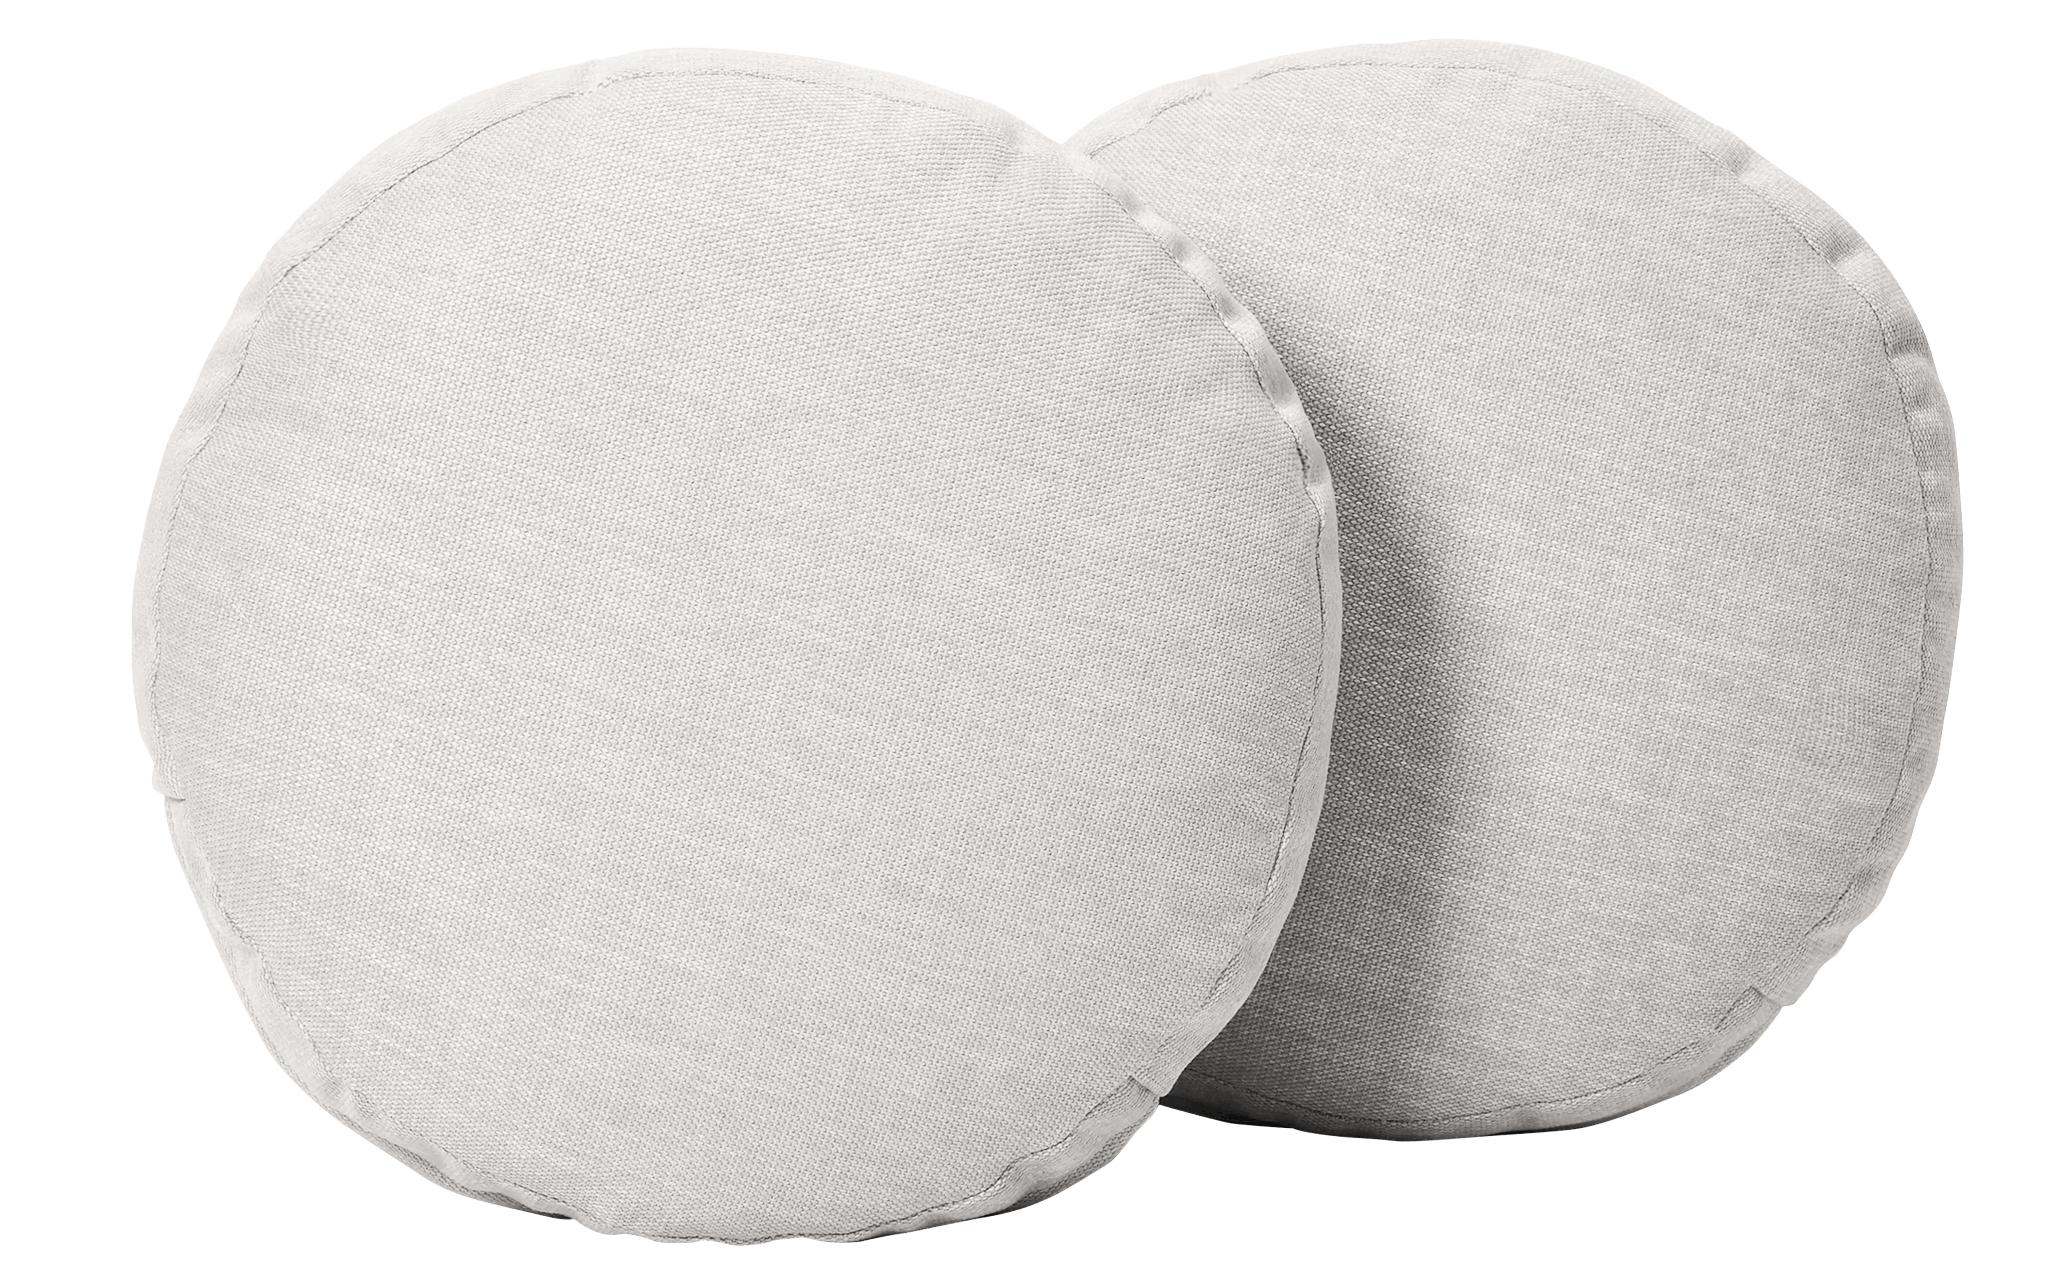 White Decorative Mid Century Modern Round Pillows 16 x 16 (Set of 2) - Tussah Blizzard - Image 0